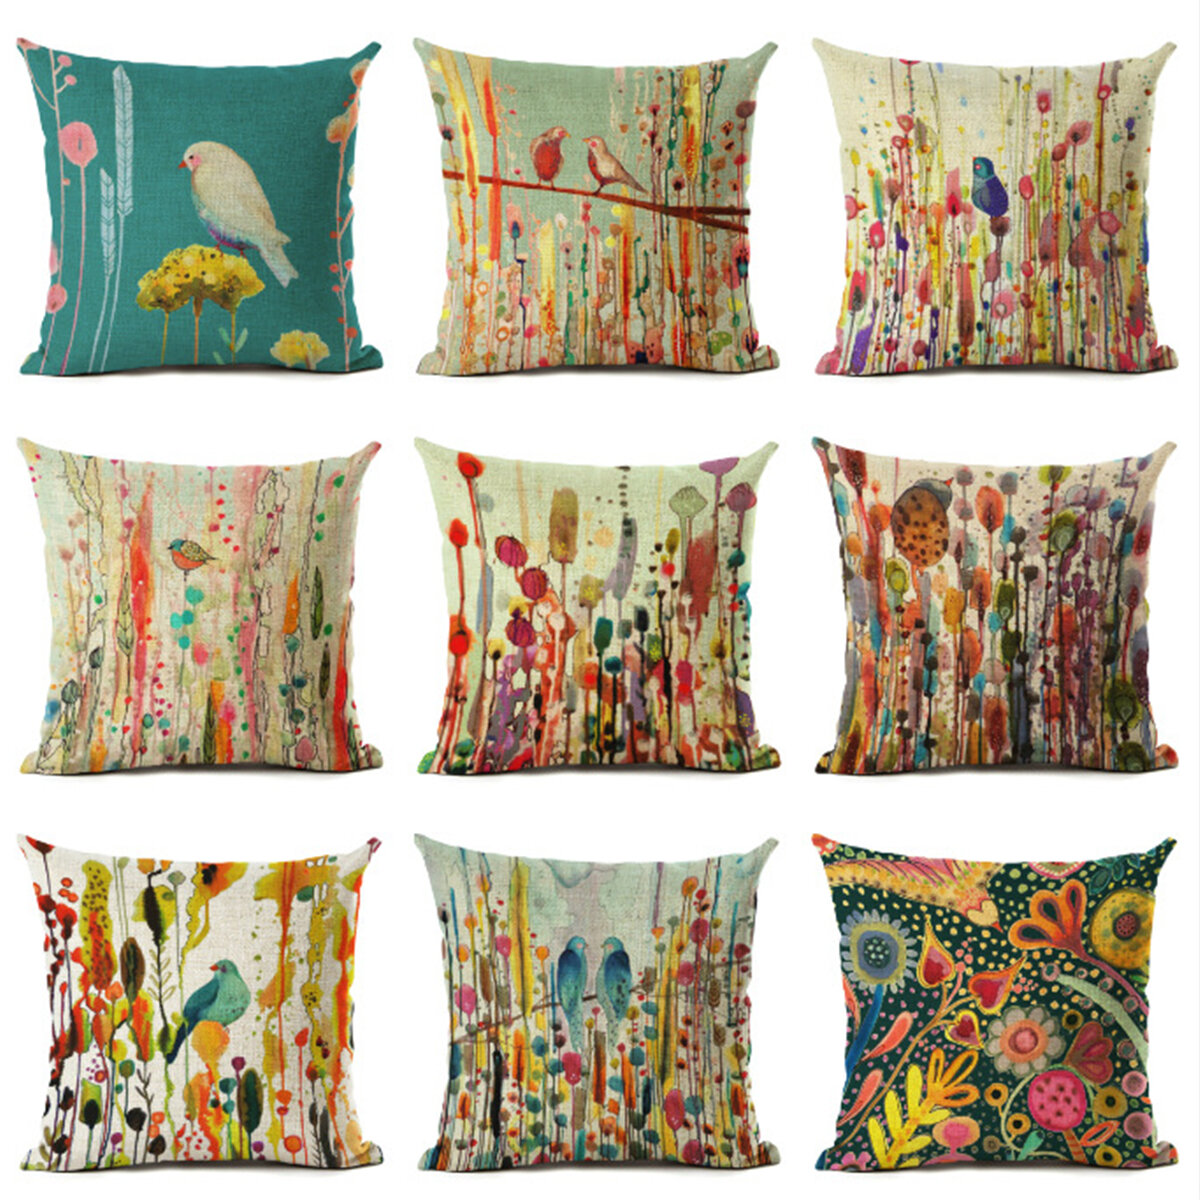 Tropical Flowers Birds Soft Cushion Cover Pillow Case Cotton Linen Home Decor